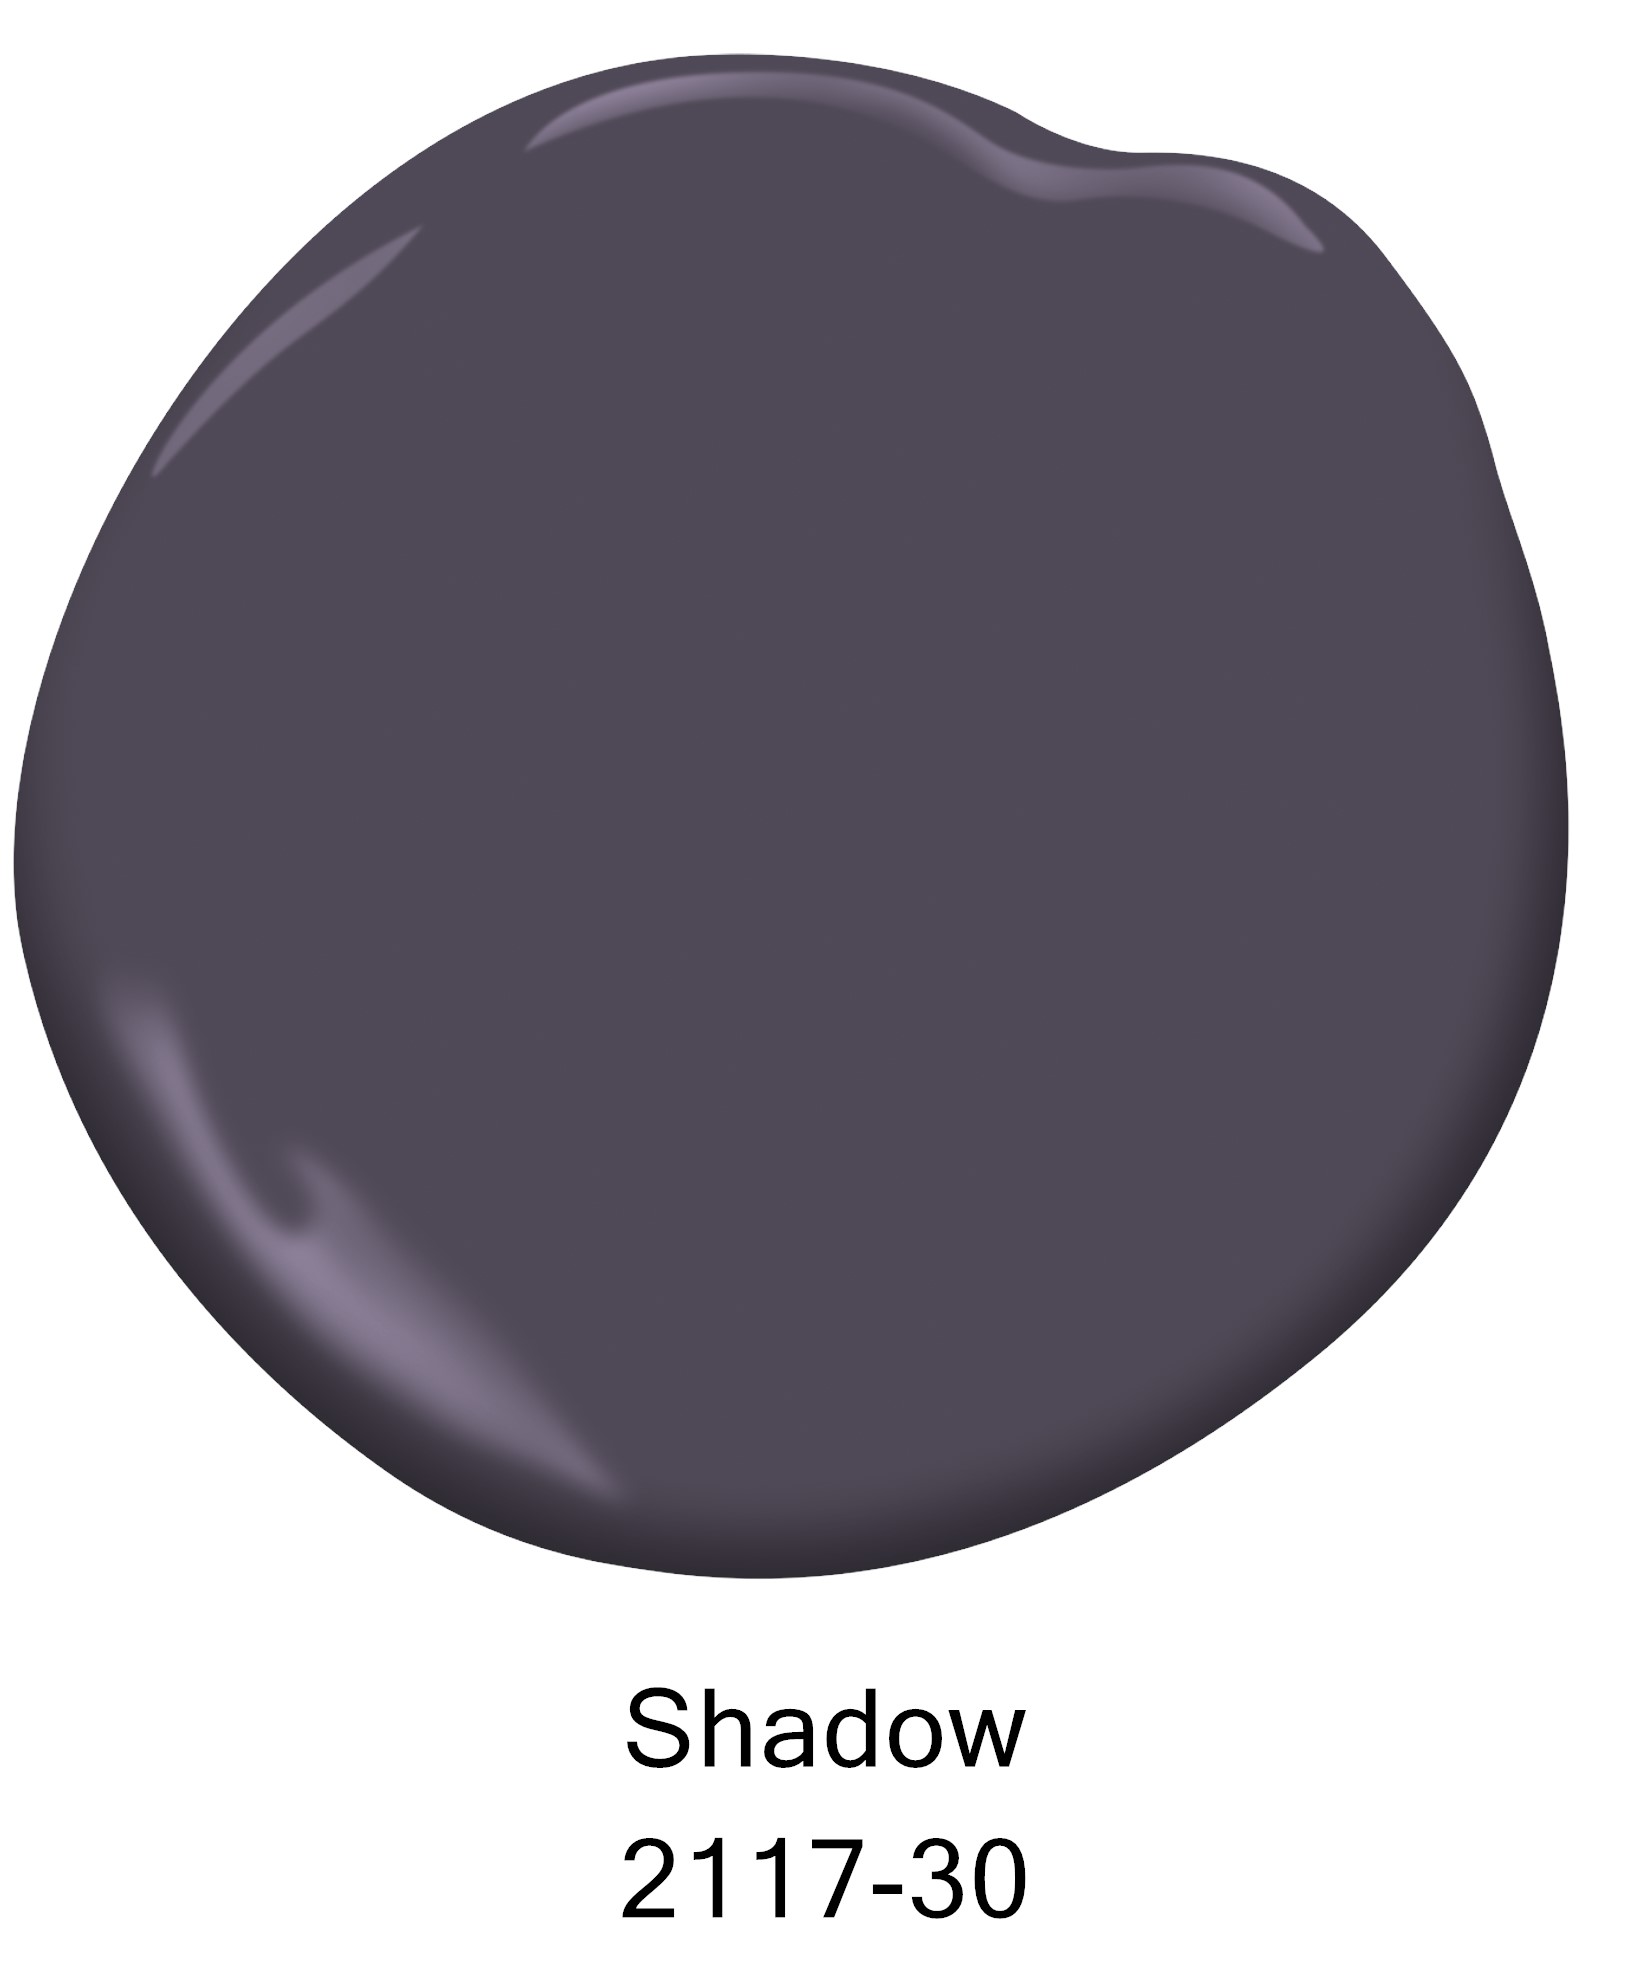 Shadow_2117-30-0001.jpg